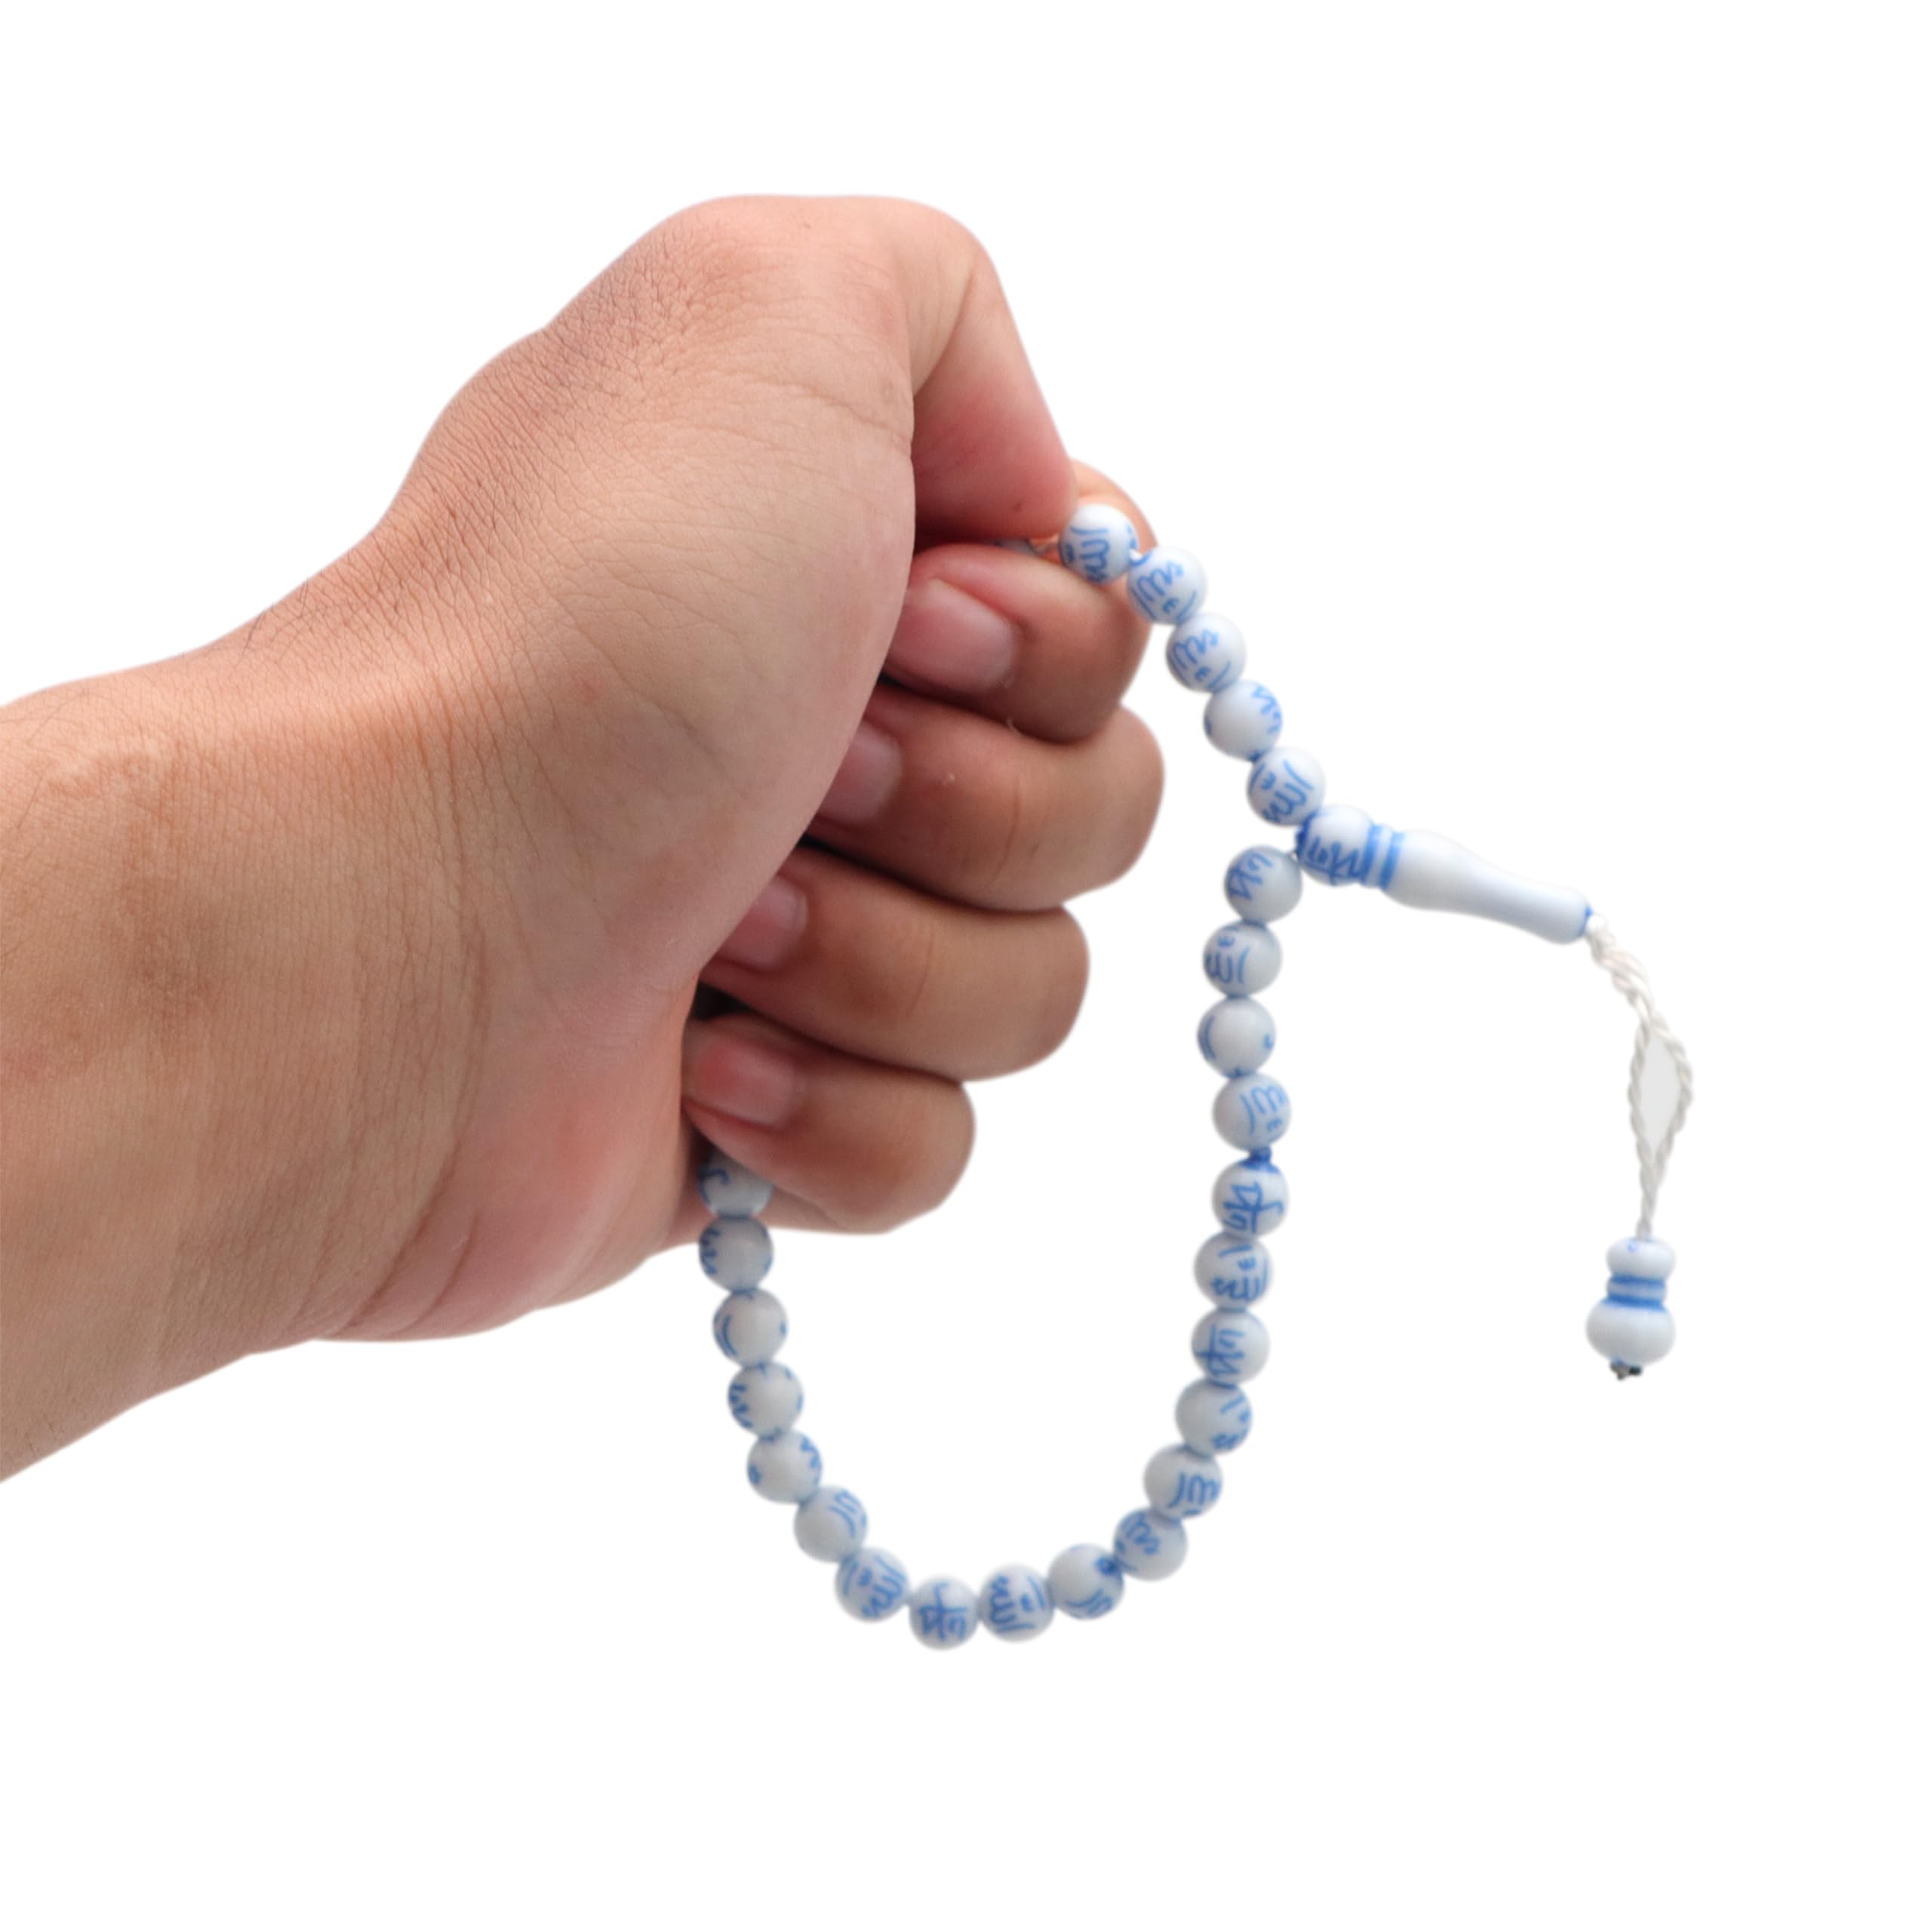 Muslim Prayer Bracelet 33-Beads Tasbih with ALLAH Muhammad Engraved on 7mm Beads 26-inch White & Blue – Tasbeeh Sibha Misbaha Dhikr Beads for SALAWAT